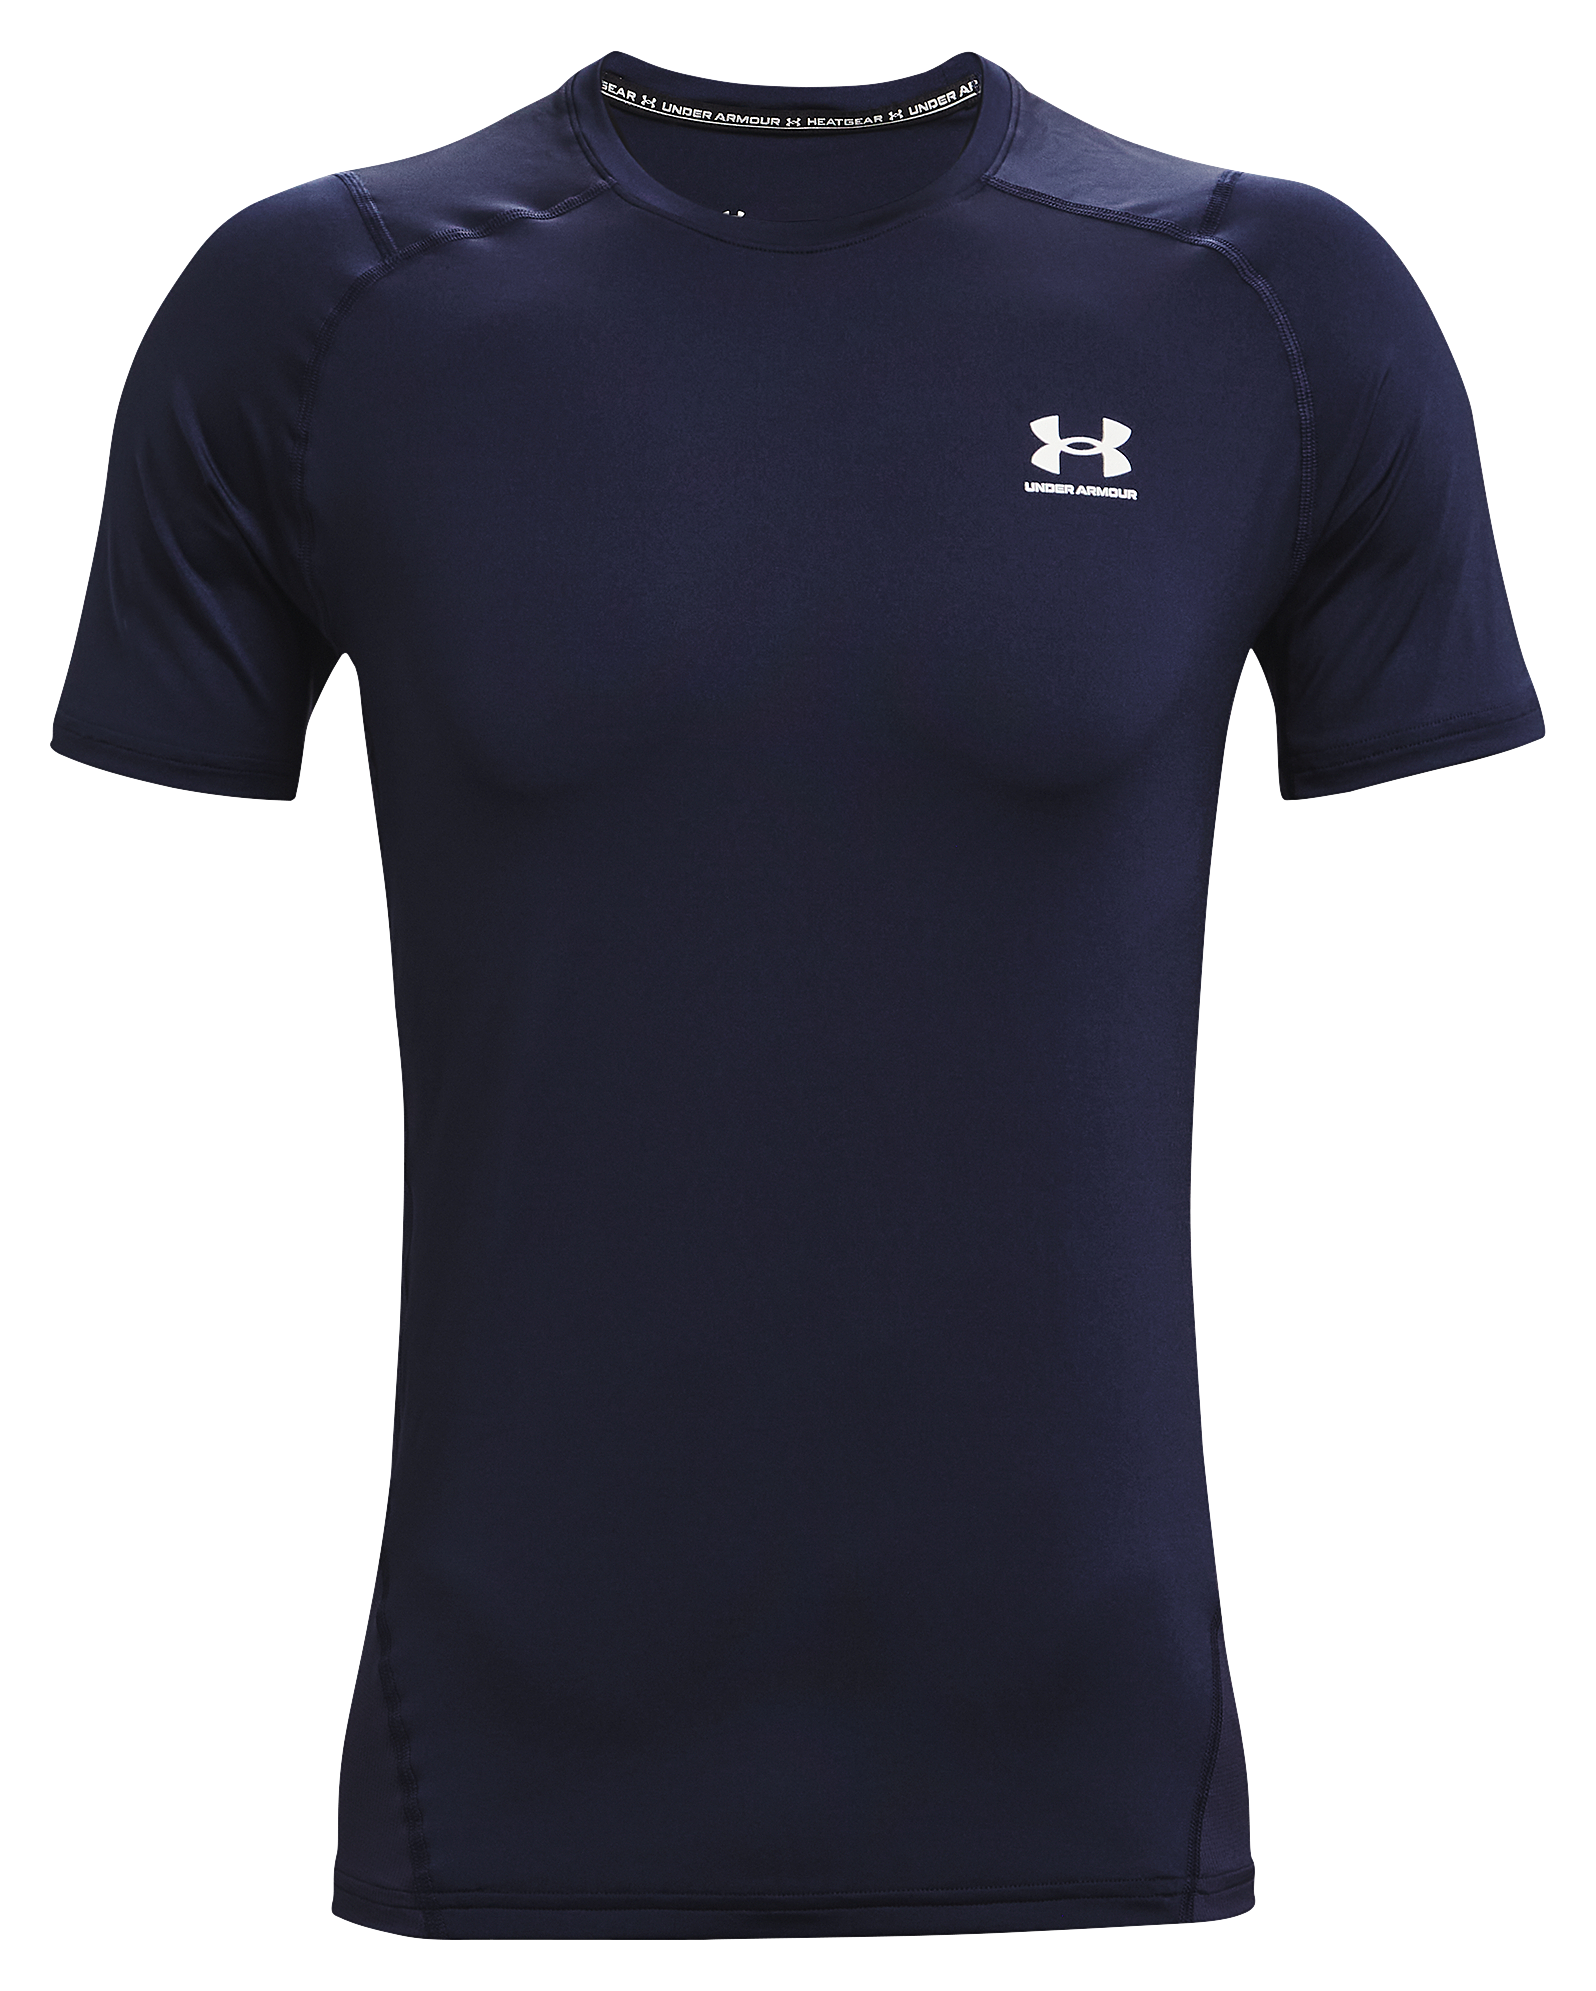 Under Armour HeatGear Fitted Short-Sleeve T-Shirt for Men - Midnight Navy - 3XLT